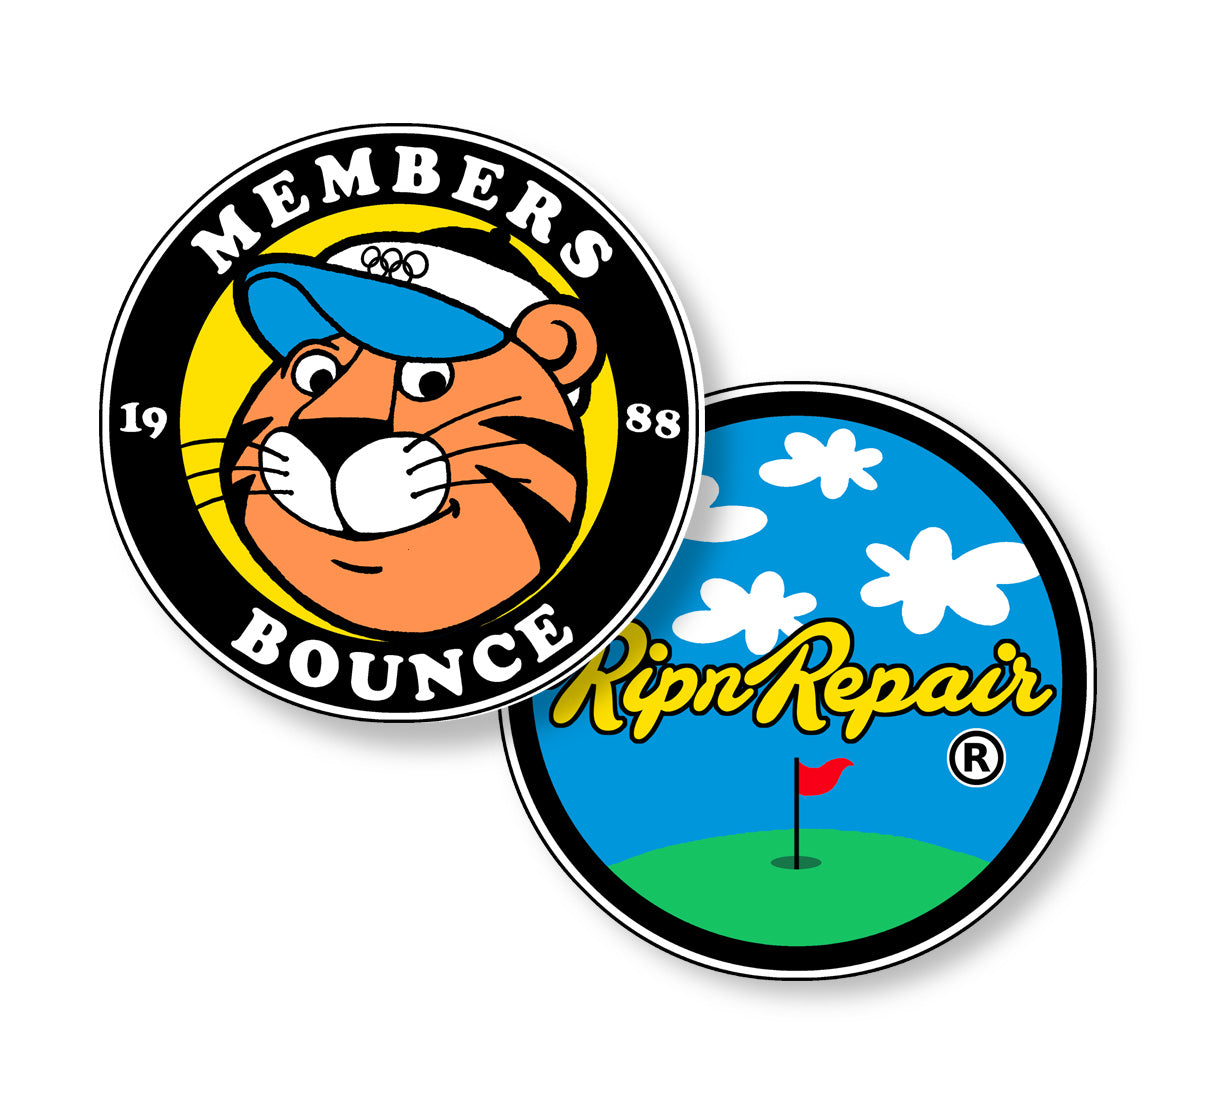 Members Bounce since '88 - RIPNRPR